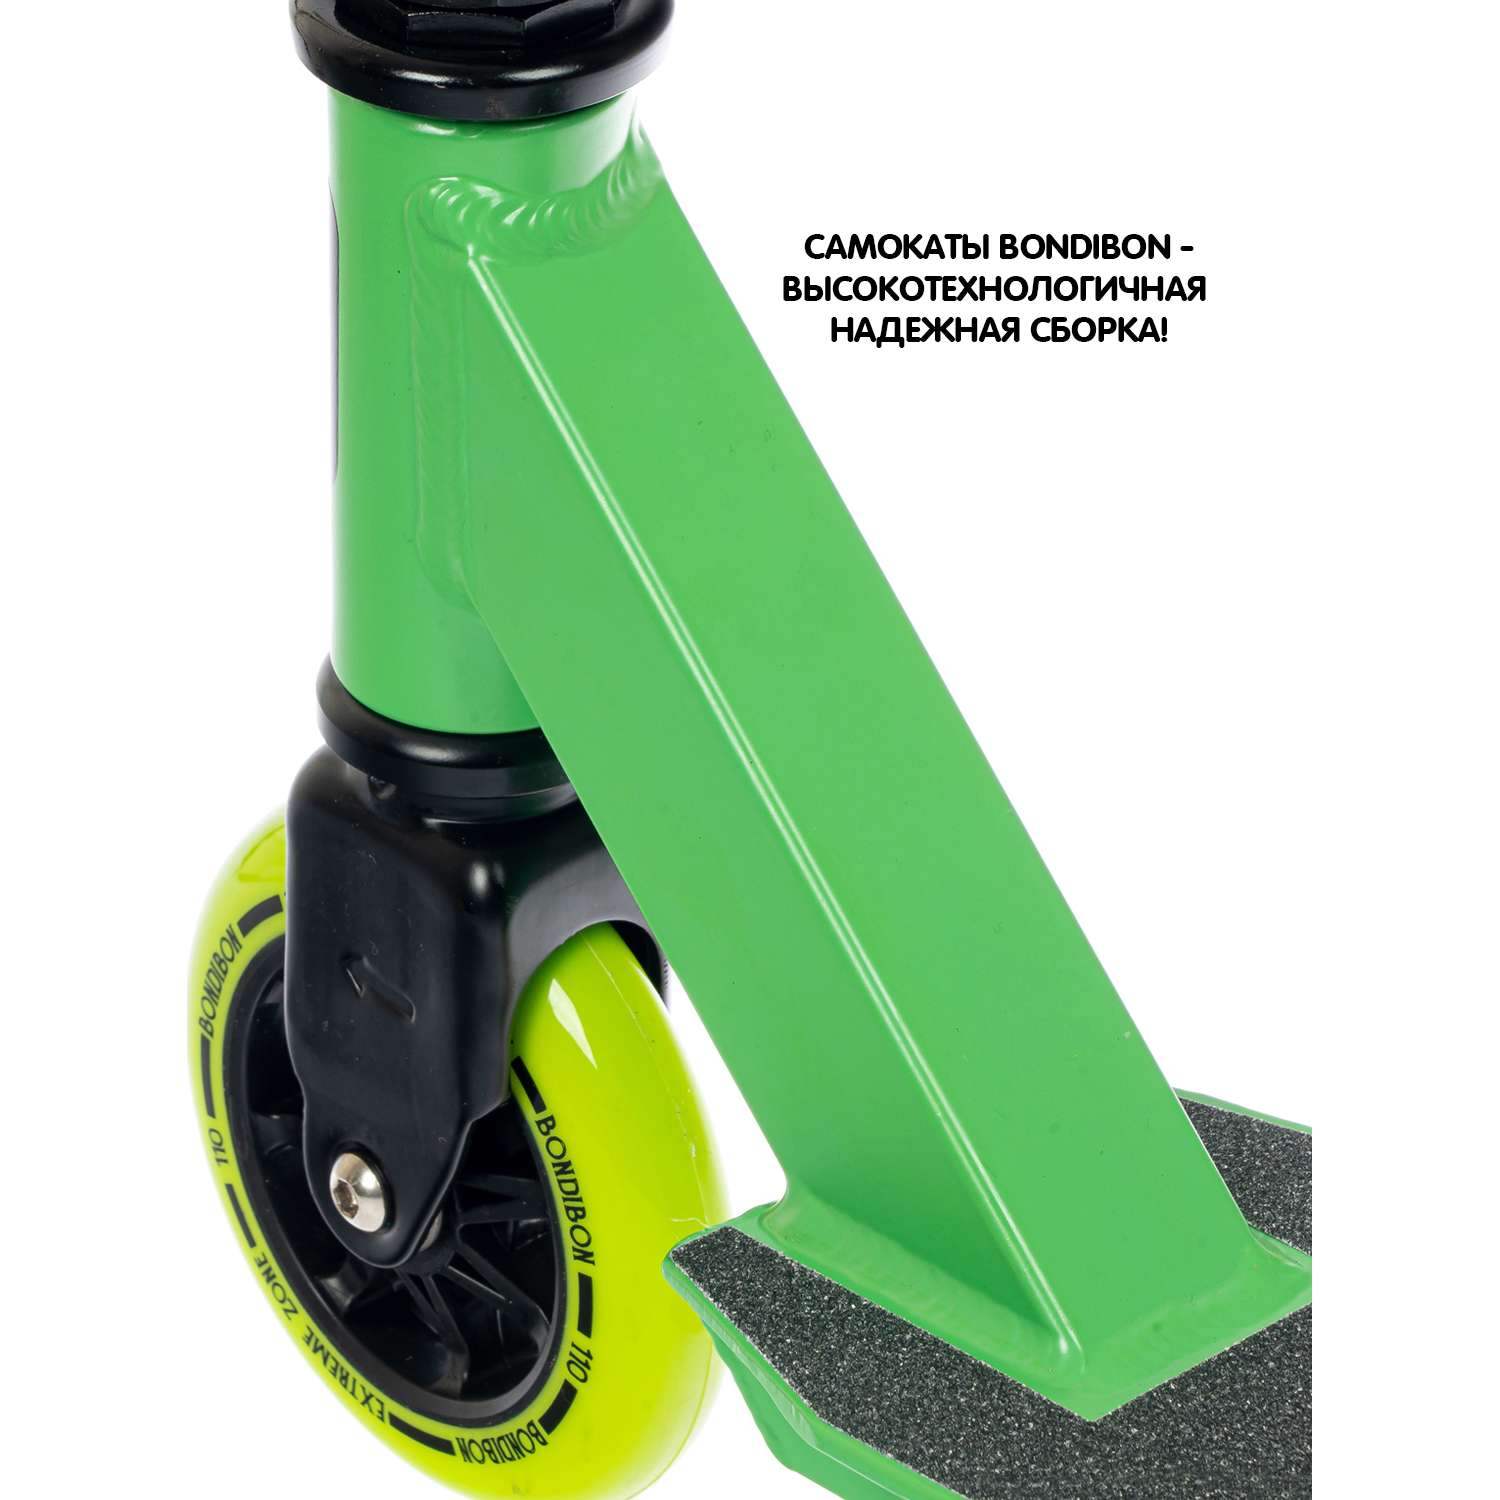 Самокат детский BONDIBON stix зеленого цвета колеса 110 мм - фото 6